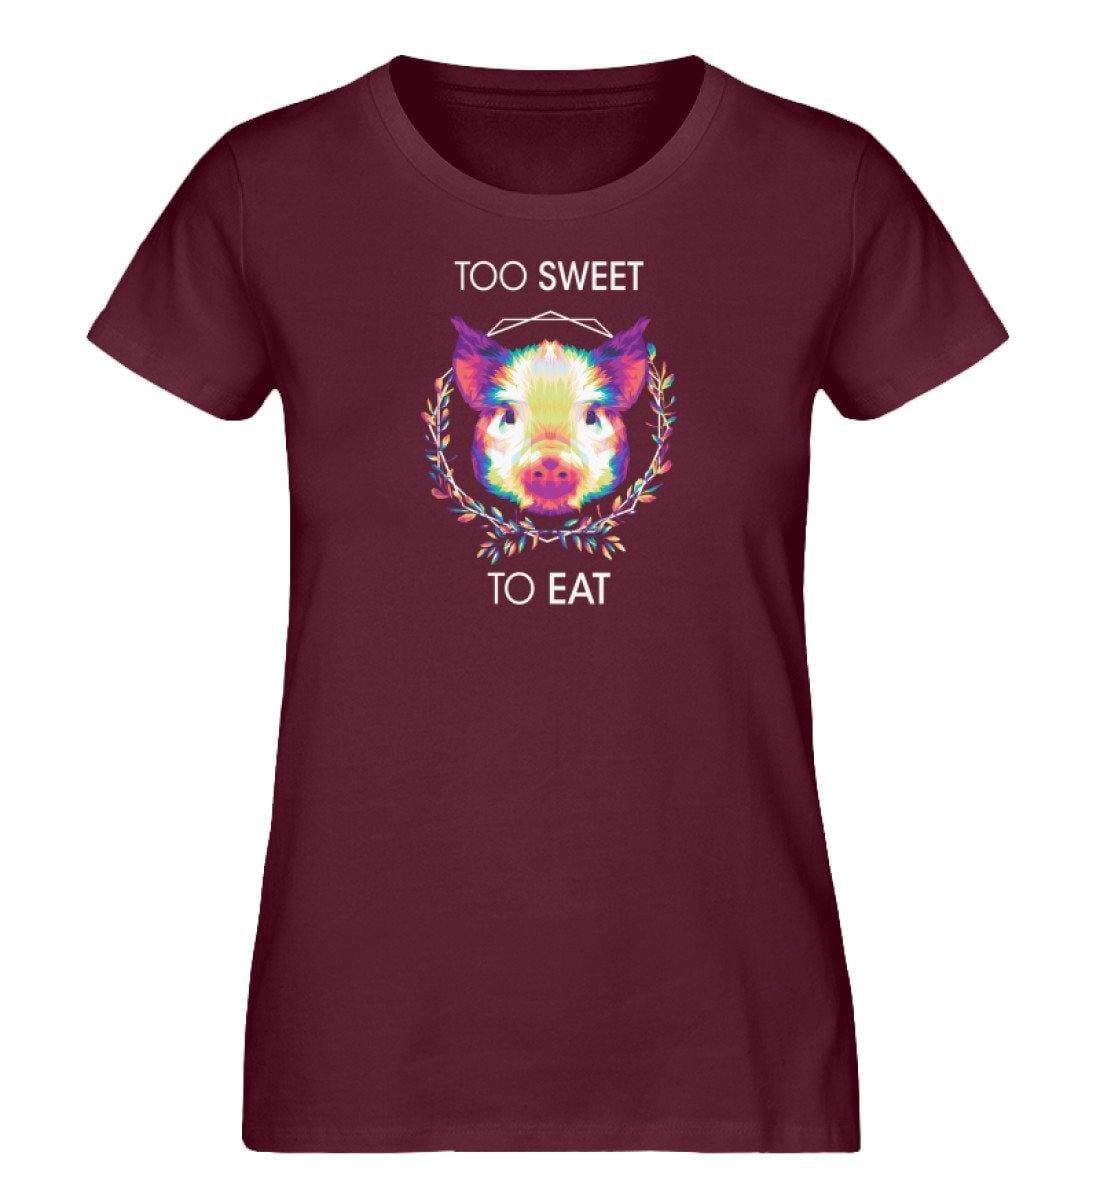 Too sweet to eat - Damen Organic Shirt - Team Vegan © vegan t shirt